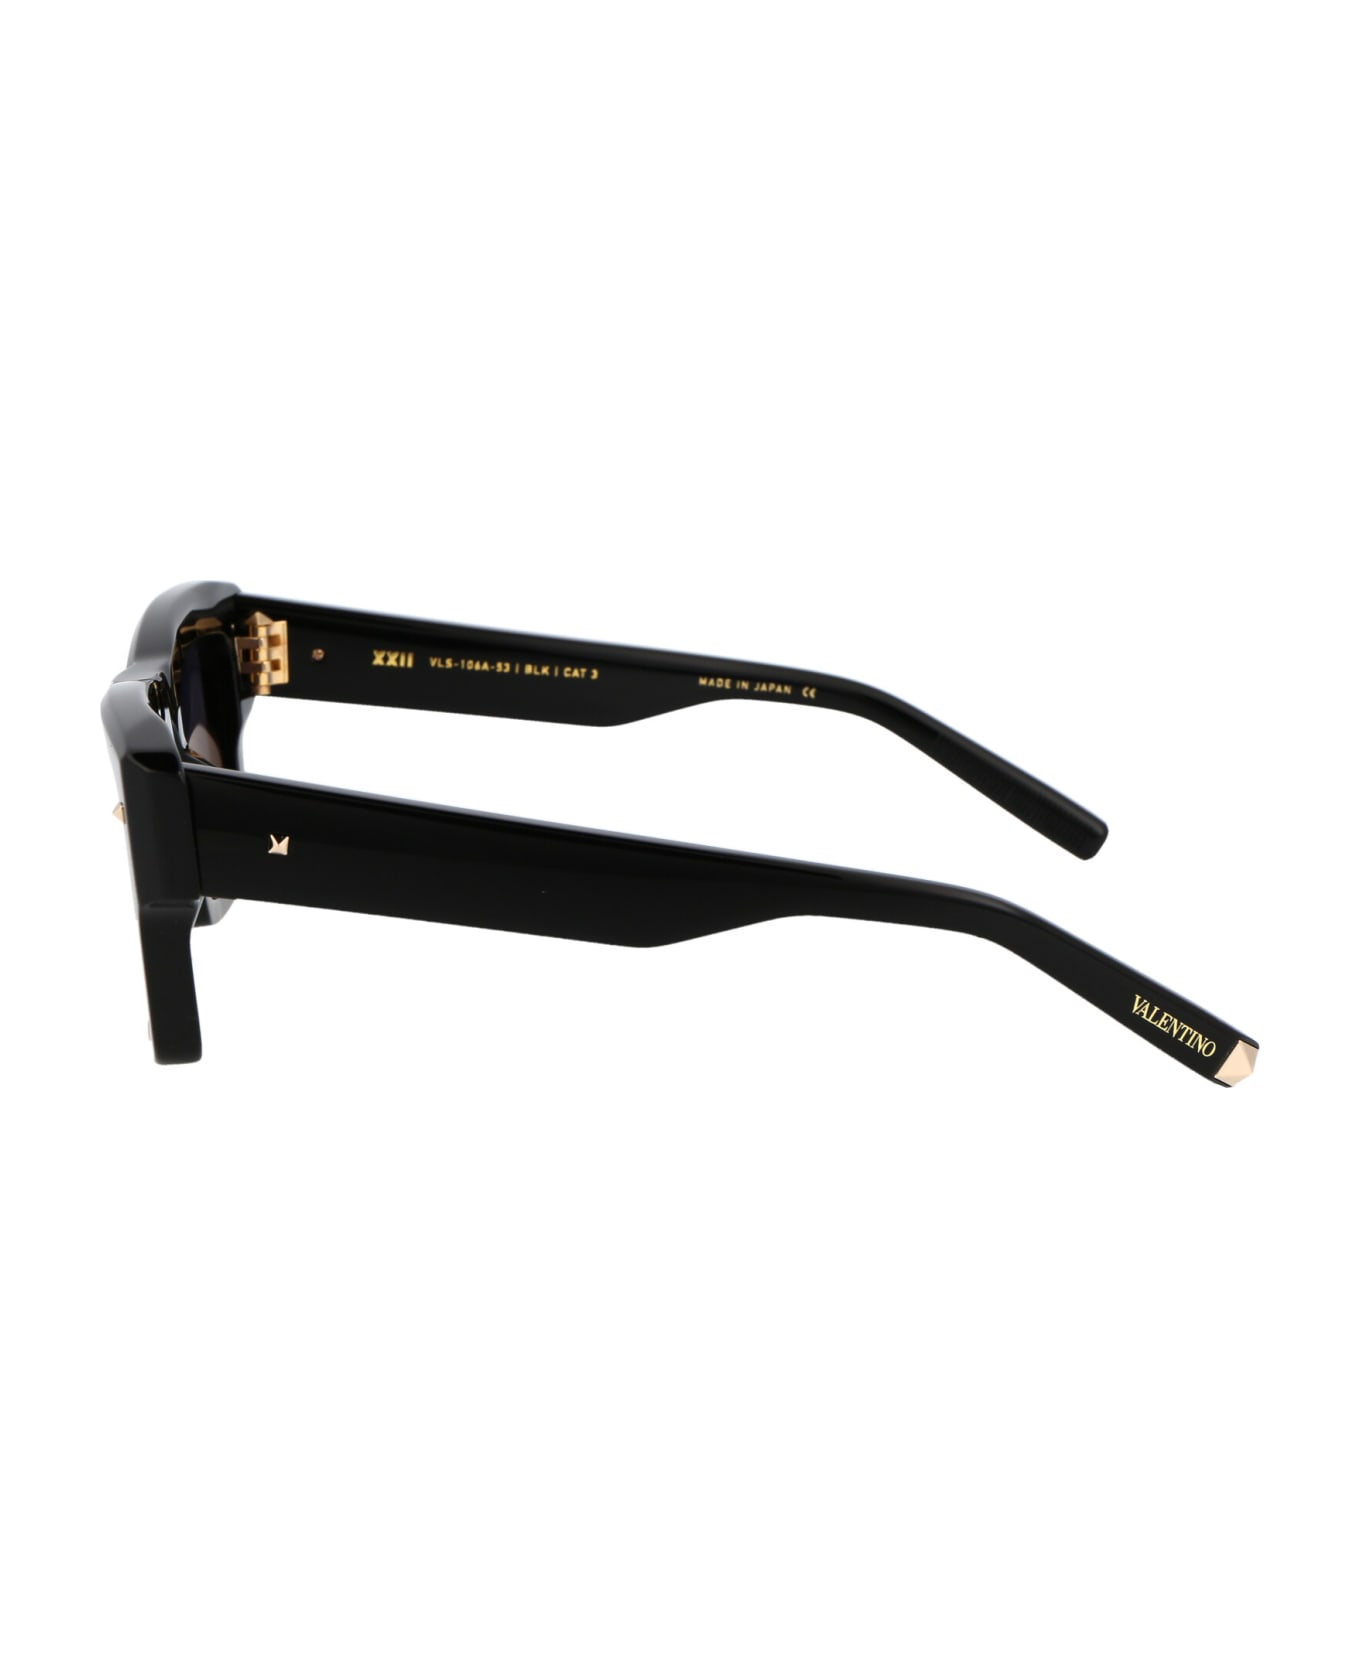 Valentino Eyewear Xxii Sunglasses - Black w/Dark Grey サングラス